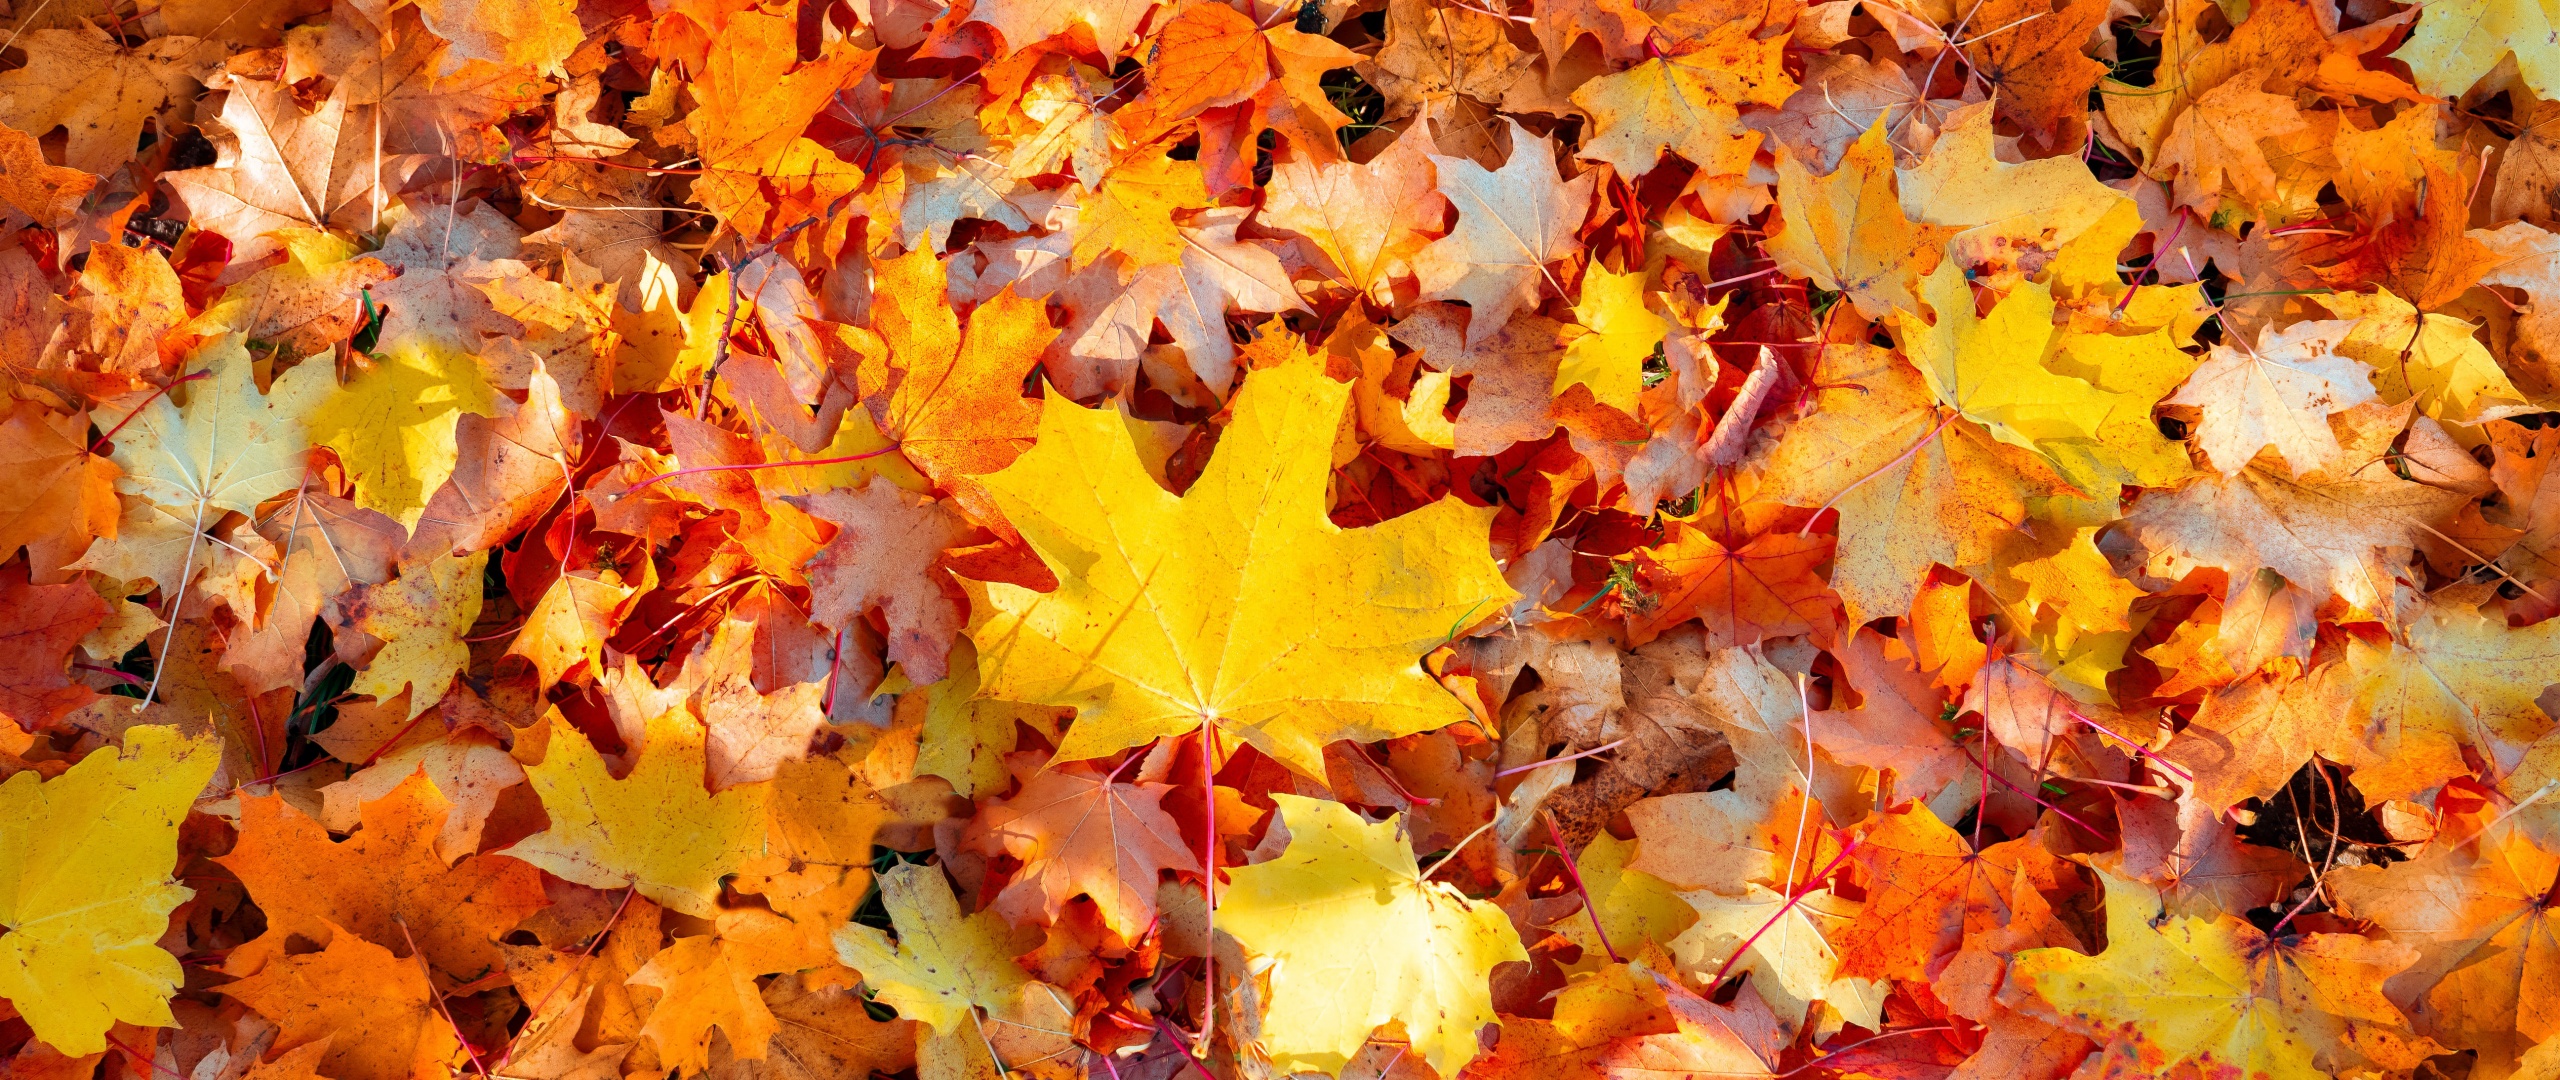 Maple leaves Wallpaper 4K, Autumn leaves, Nature, #4340